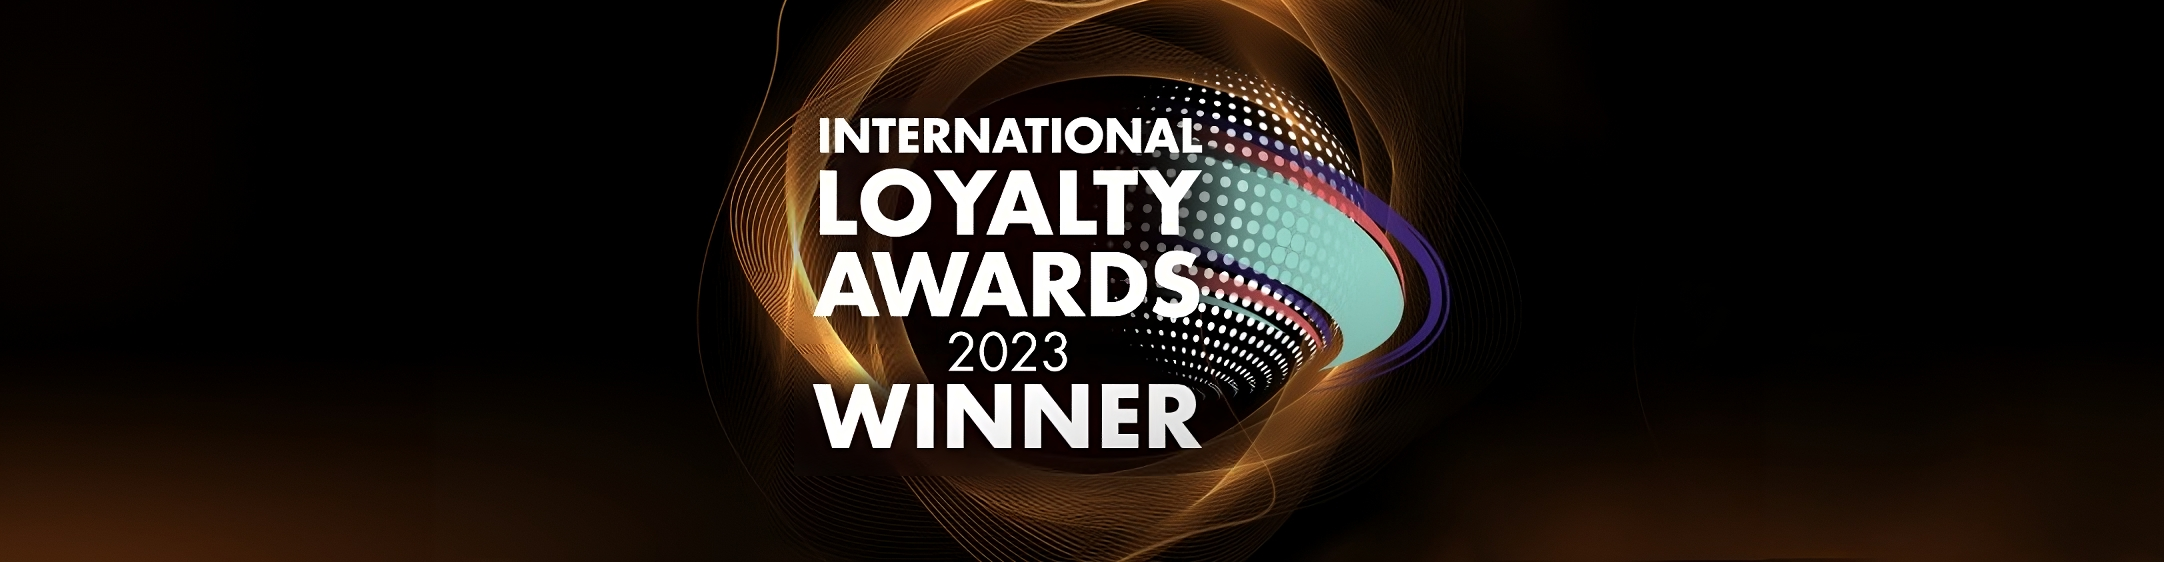 International Loyalty Awards Winner 2023